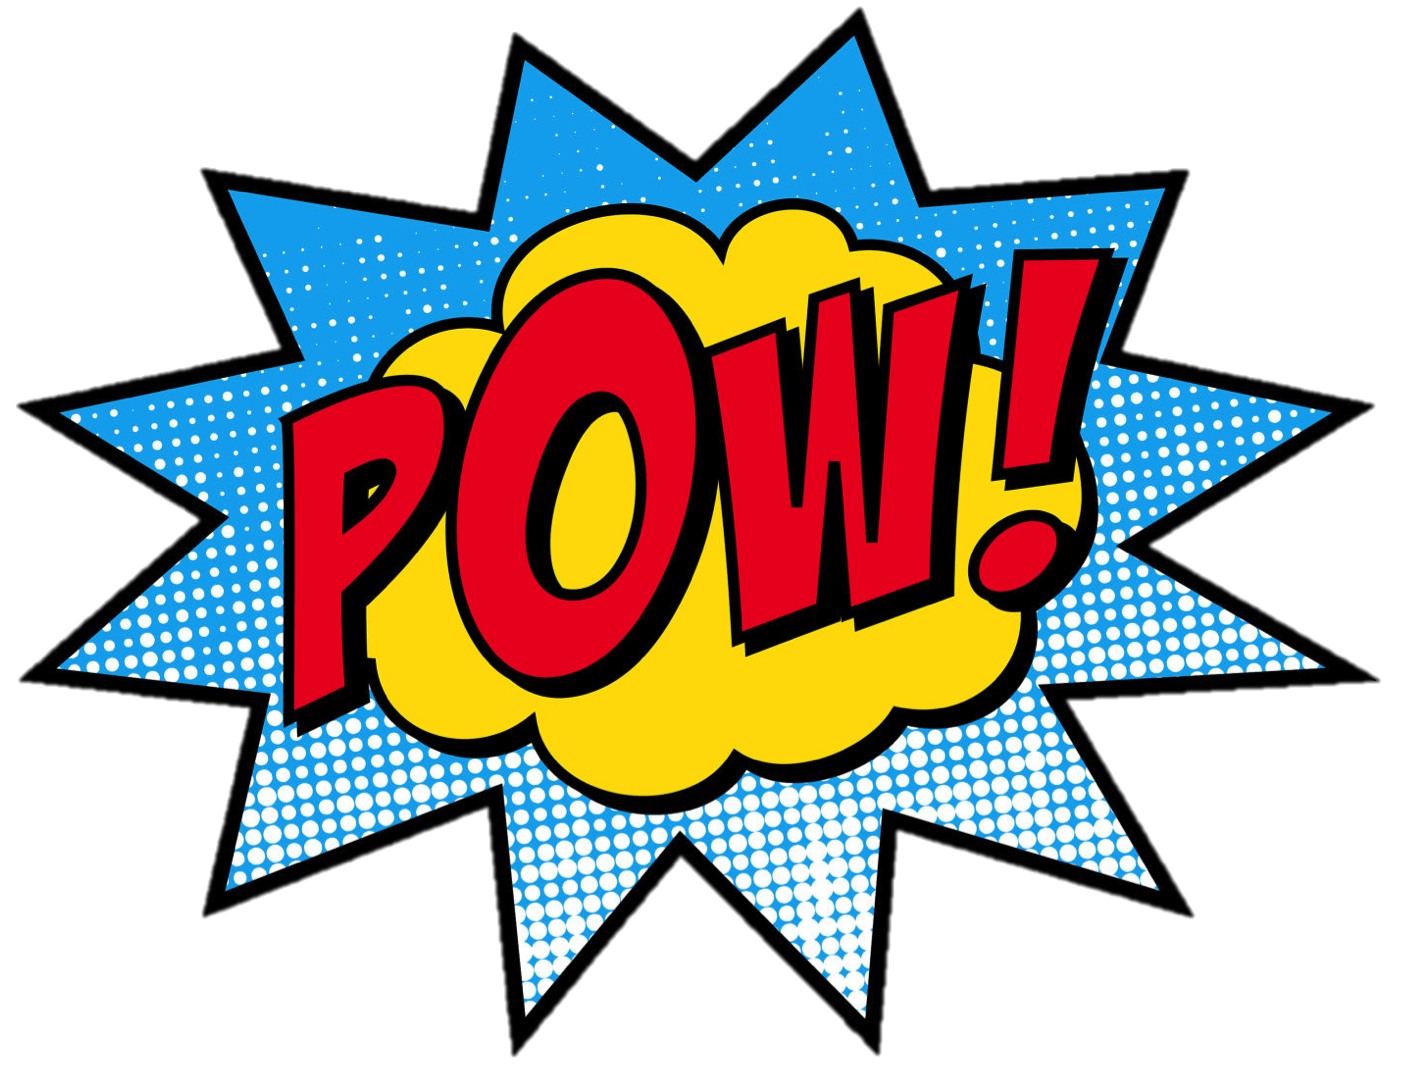 Free Batman Pow Font, Download Free Batman Pow Font png images, Free